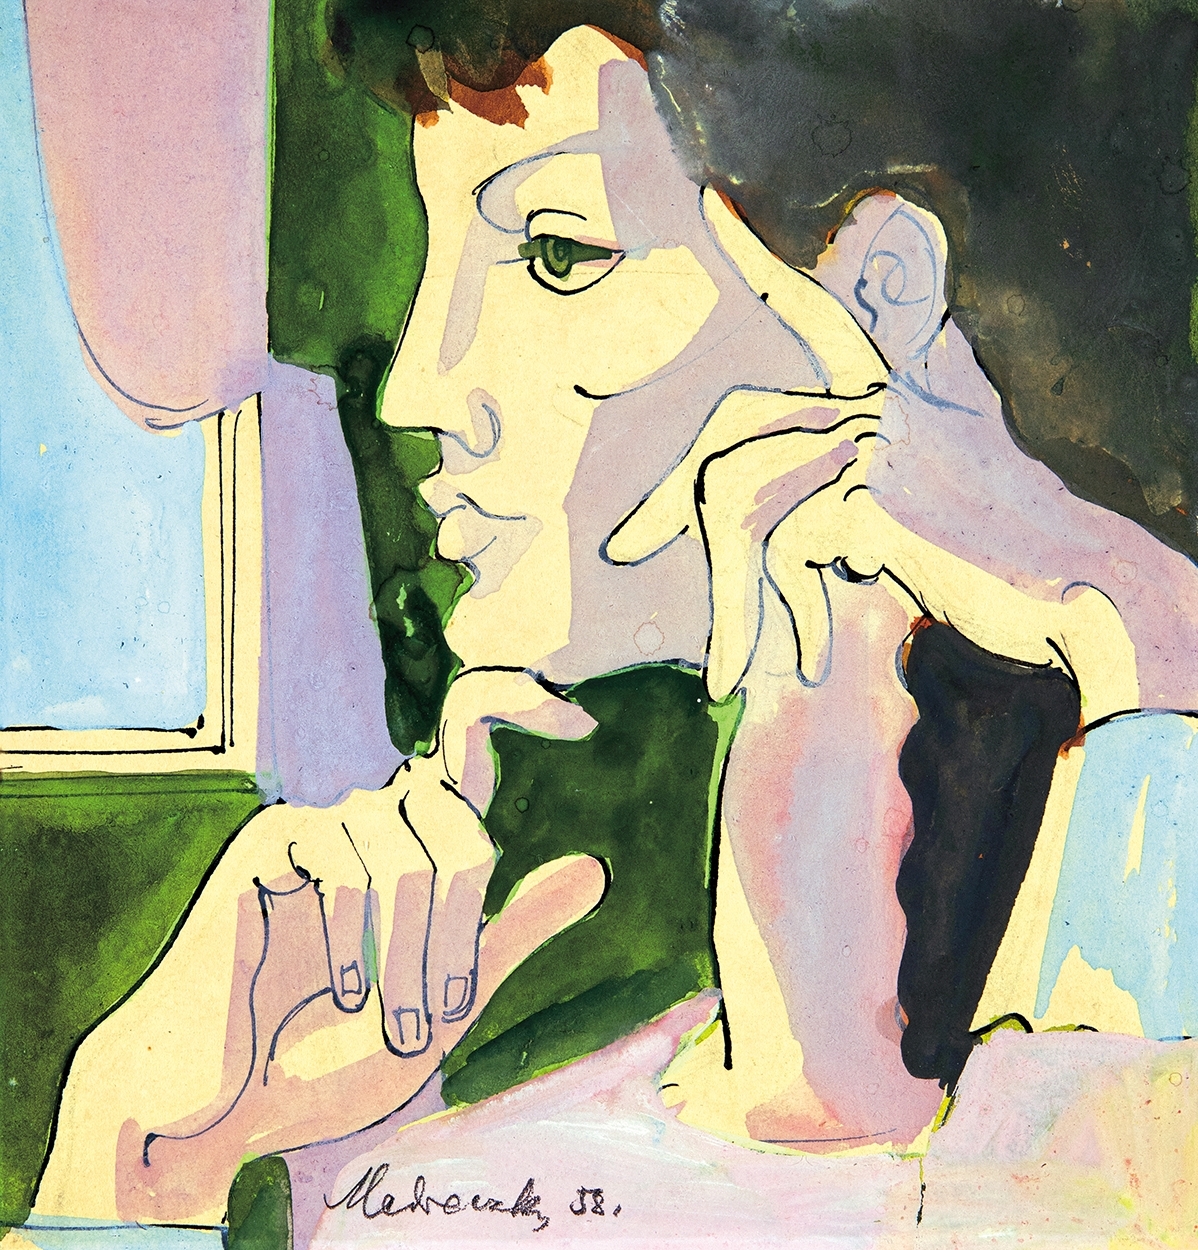 Medveczky Jenő (1902-1969) Portrait of a Woman, 1958